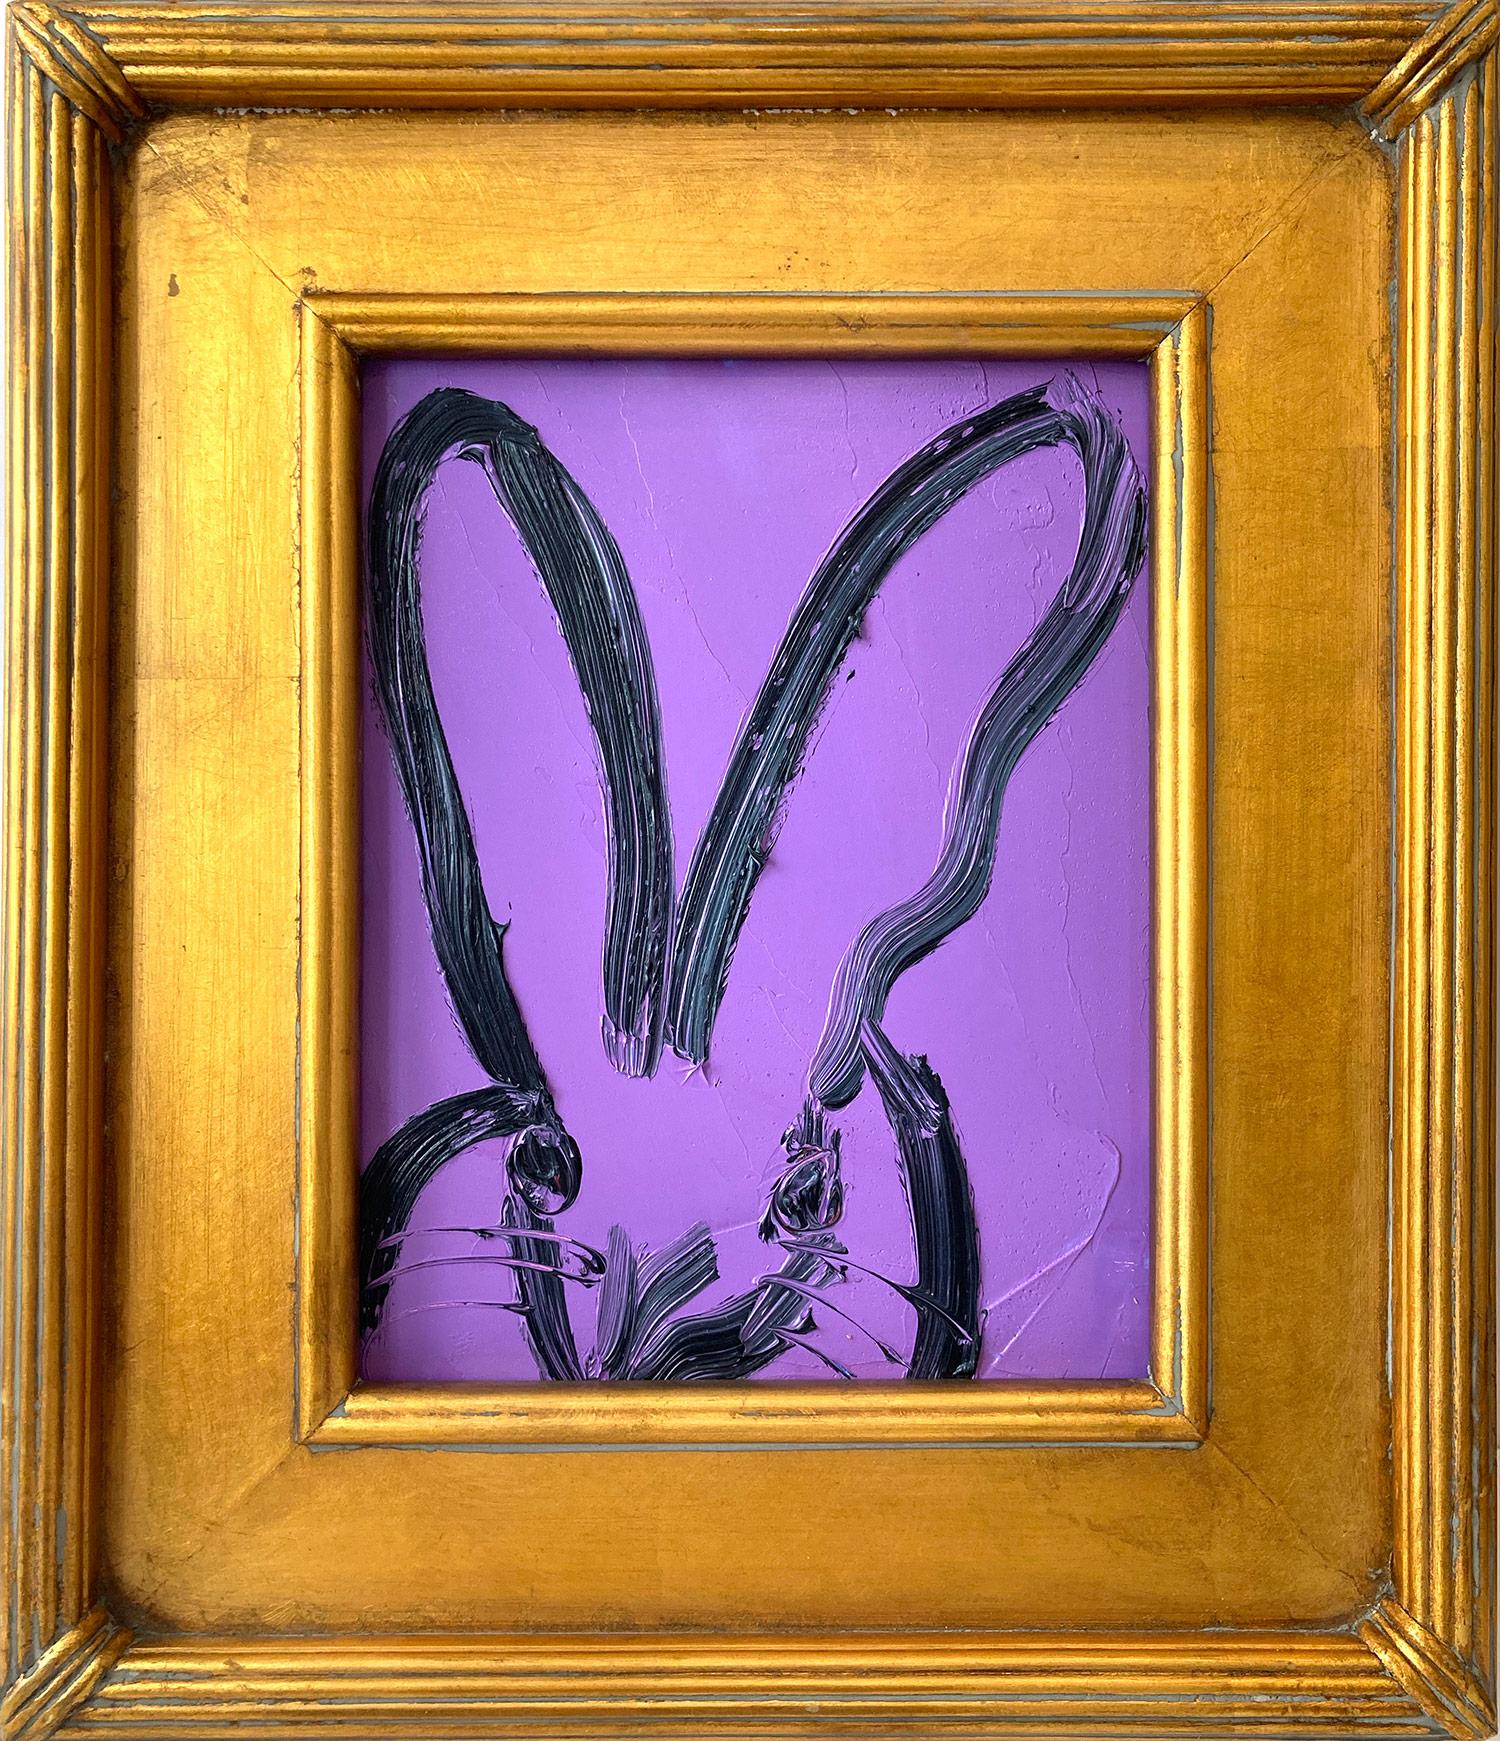 Hunt Slonem Abstract Painting - "Lavendar" (Bunny on Deep Lavender Purple Background) Oil Painting on Wood Panel